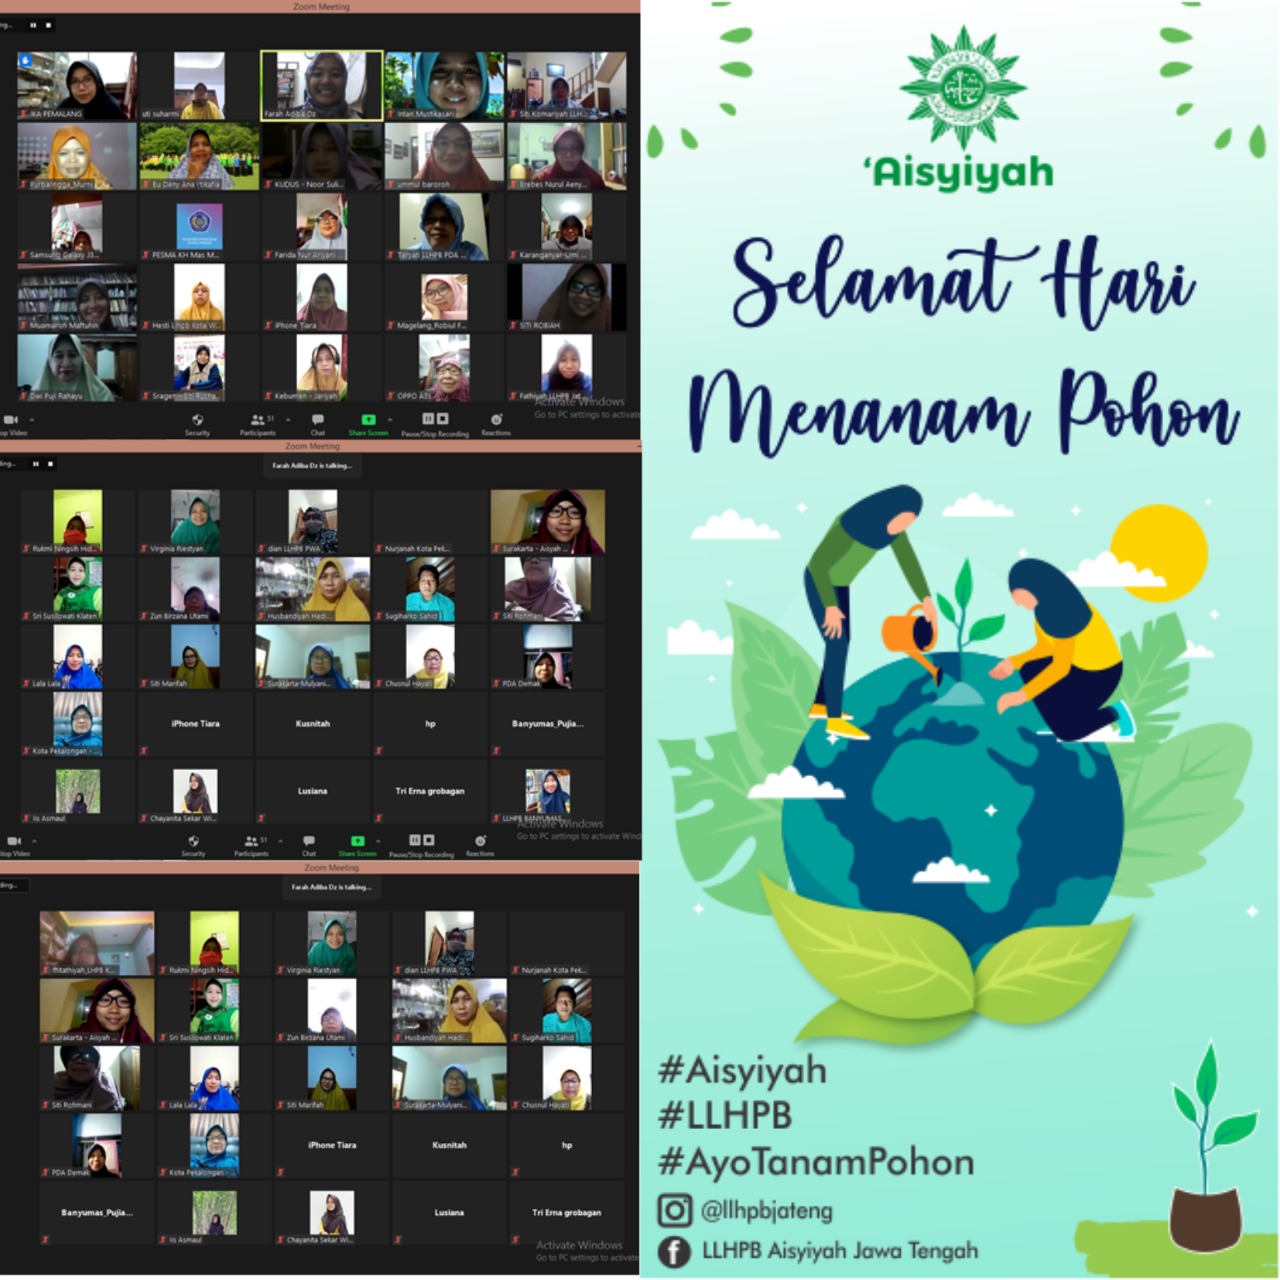 LLHPB Daerah Aisyiyah se Jawa Tengah Persiapkan Aksi Menanam Pohon pada Peringatan Hari Menanam Pohon Indonesia